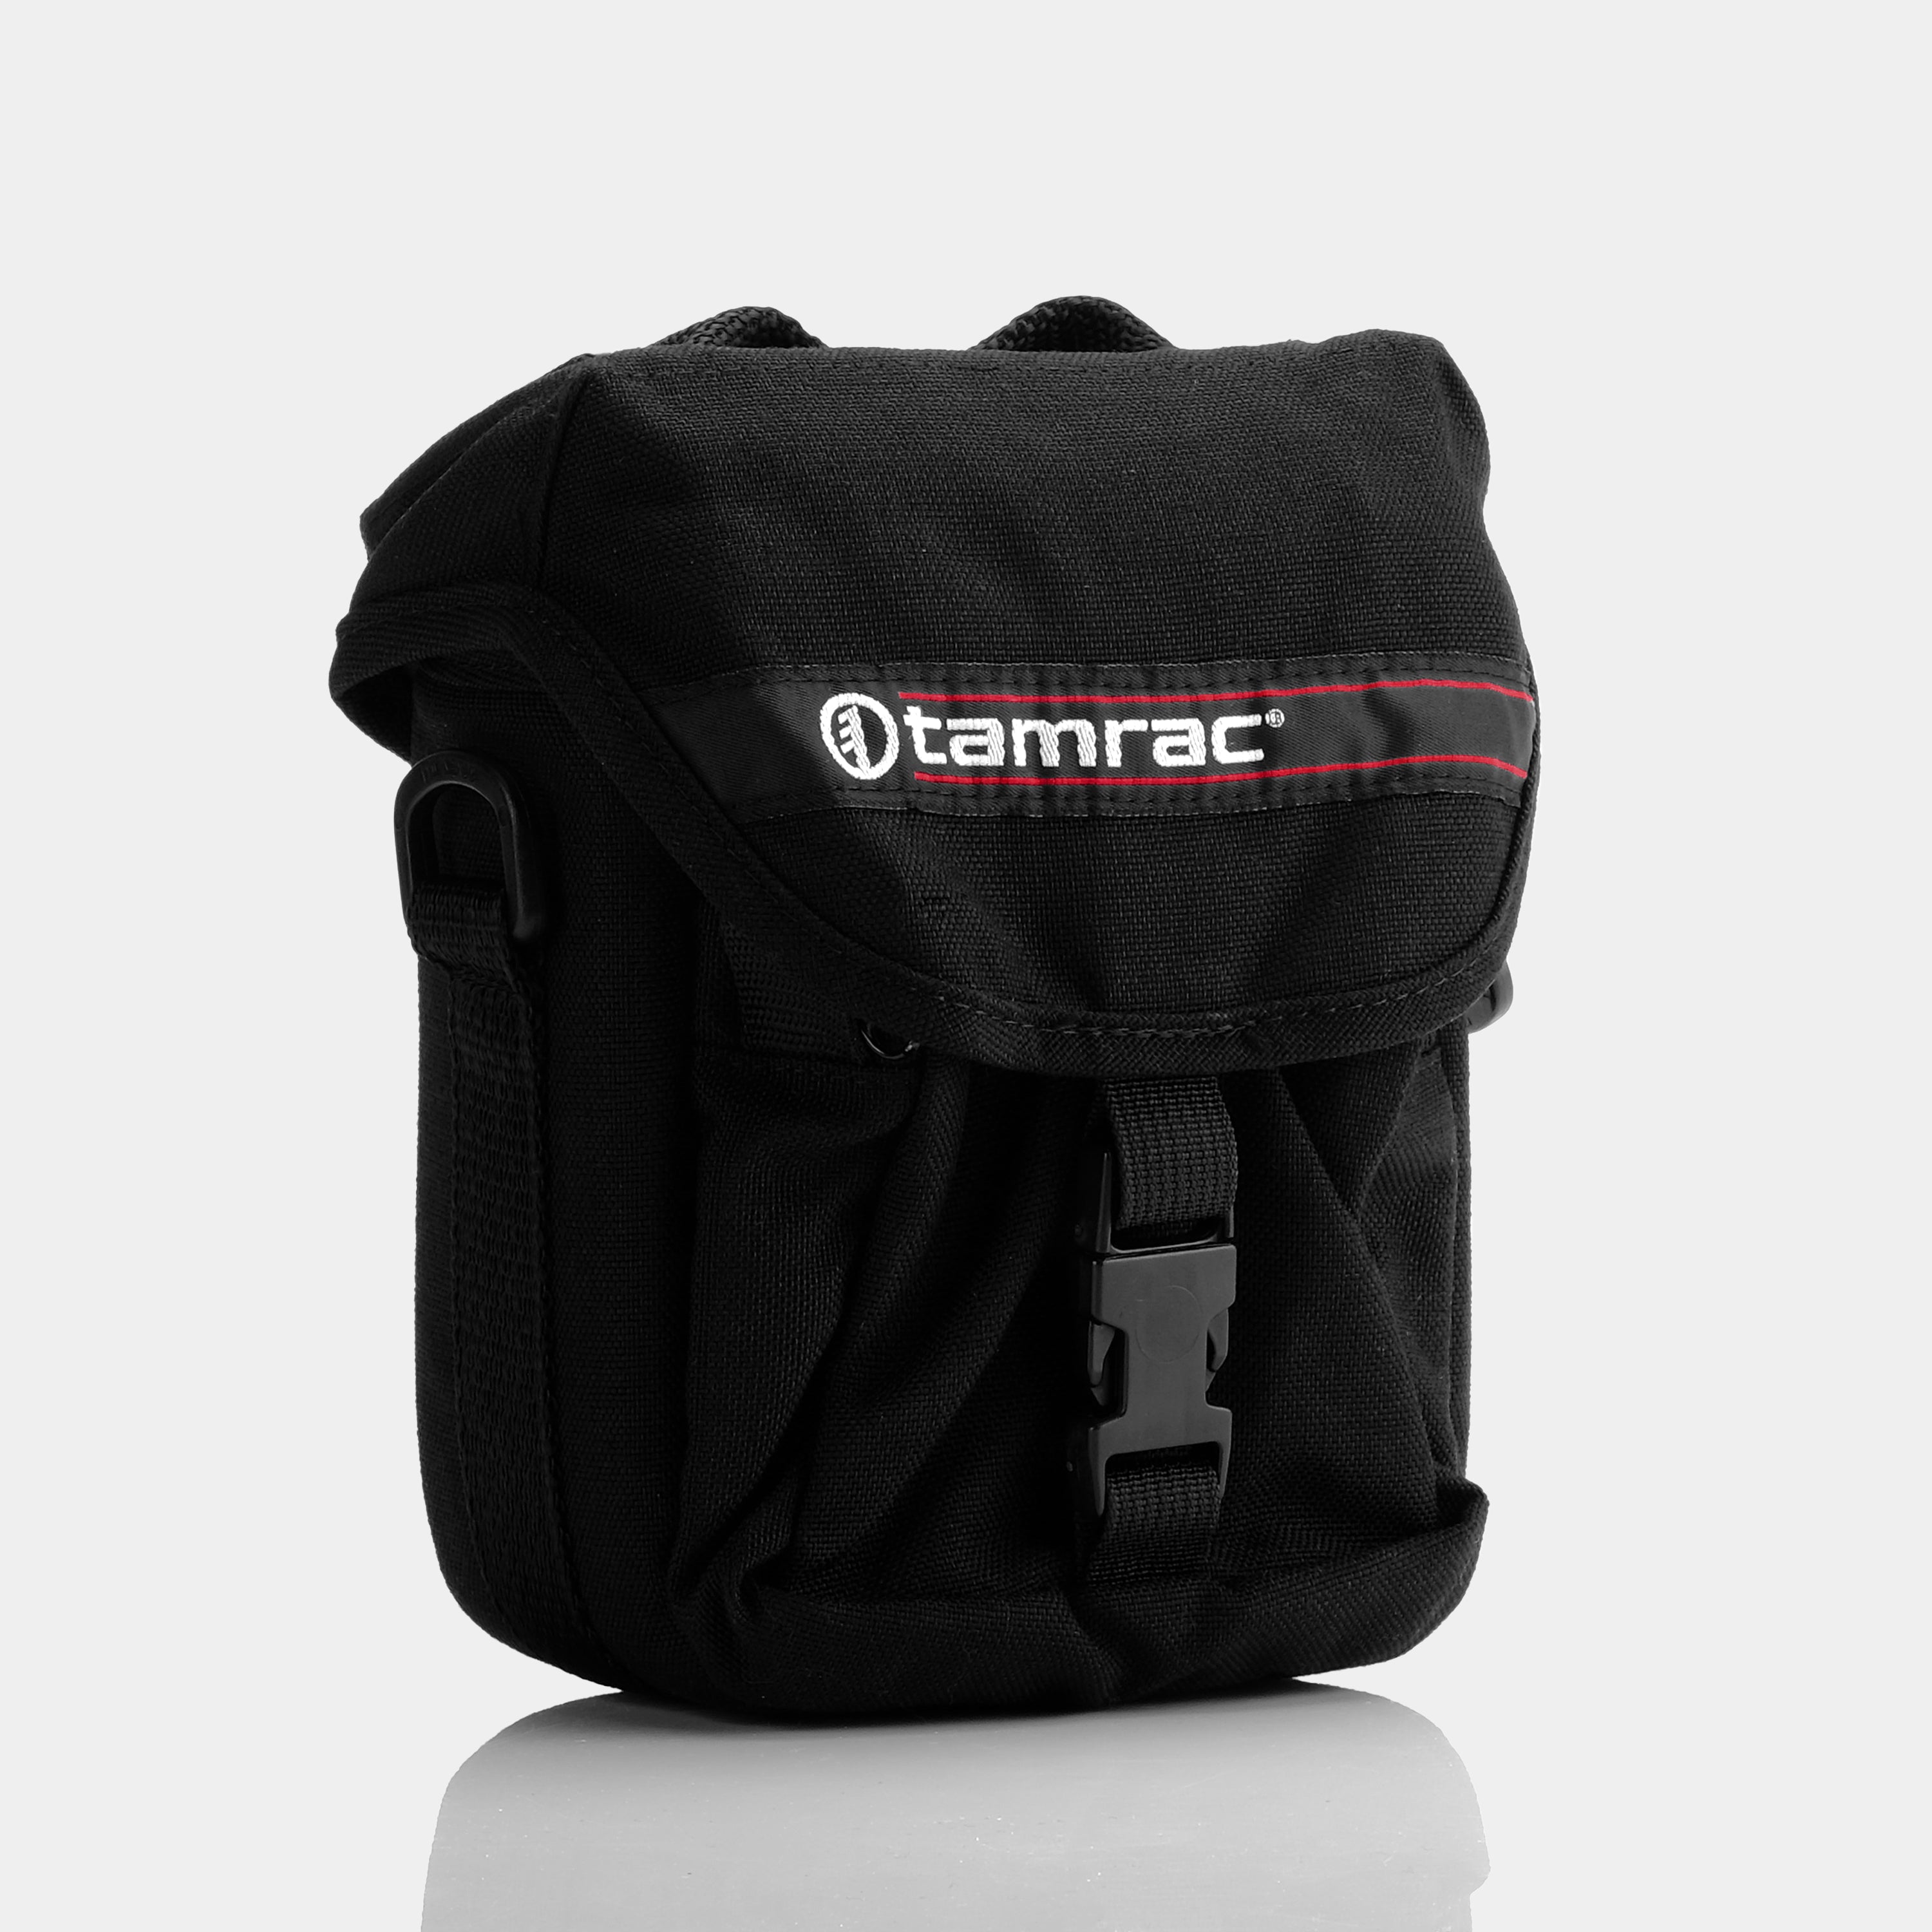 Tamrac Black Camera Bag